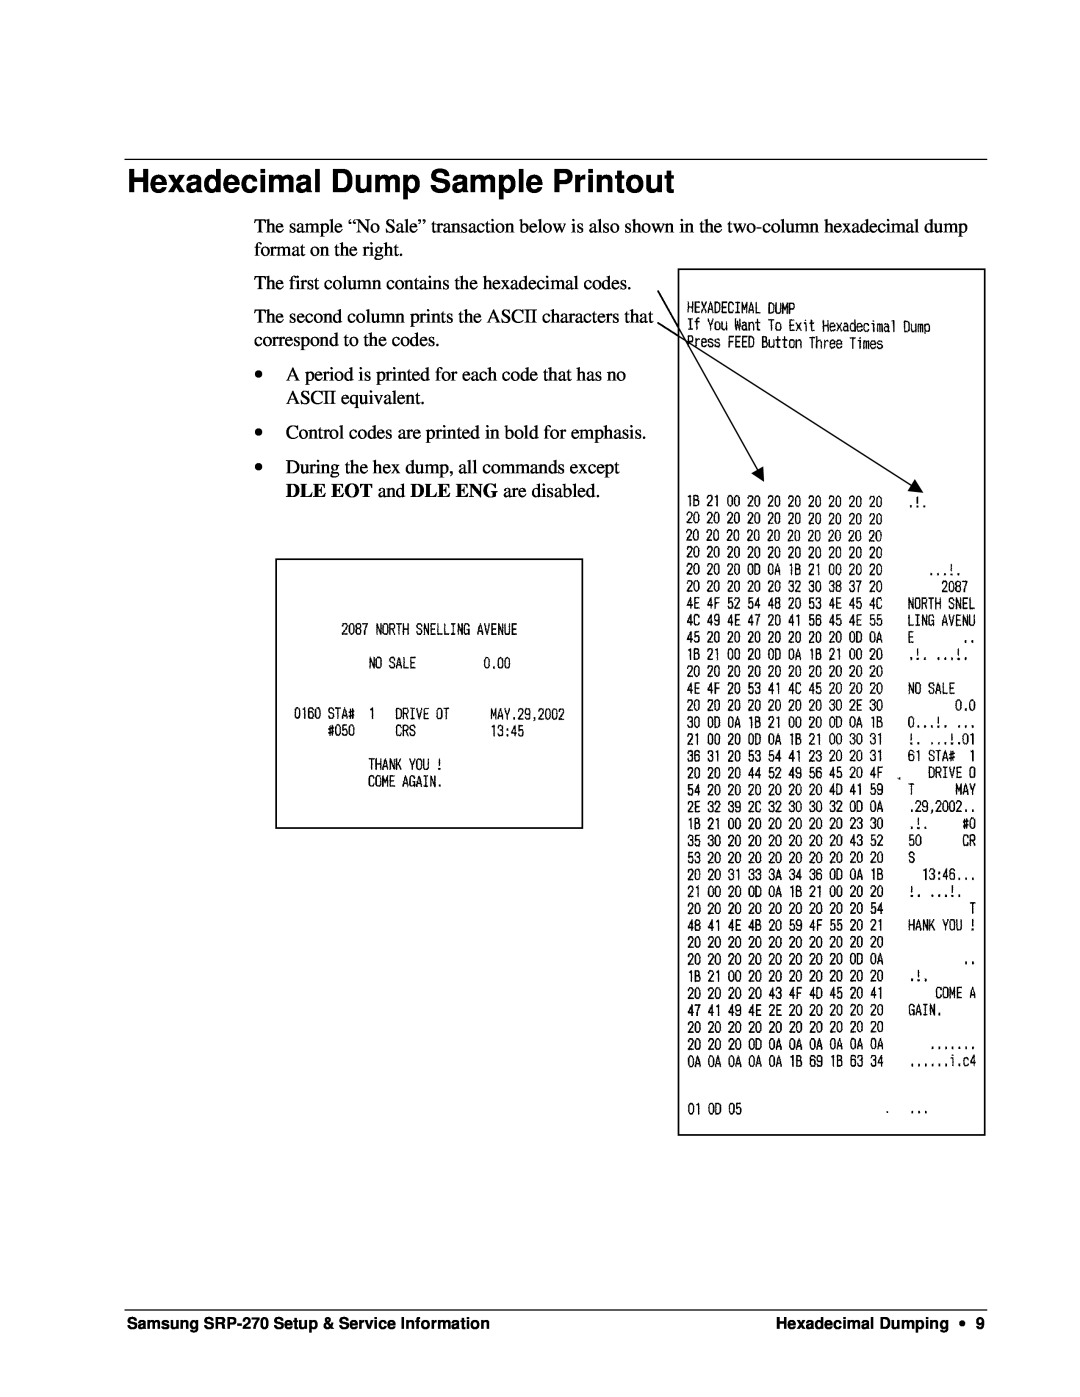 Samsung SRP-270 specifications Hexadecimal Dump Sample Printout 